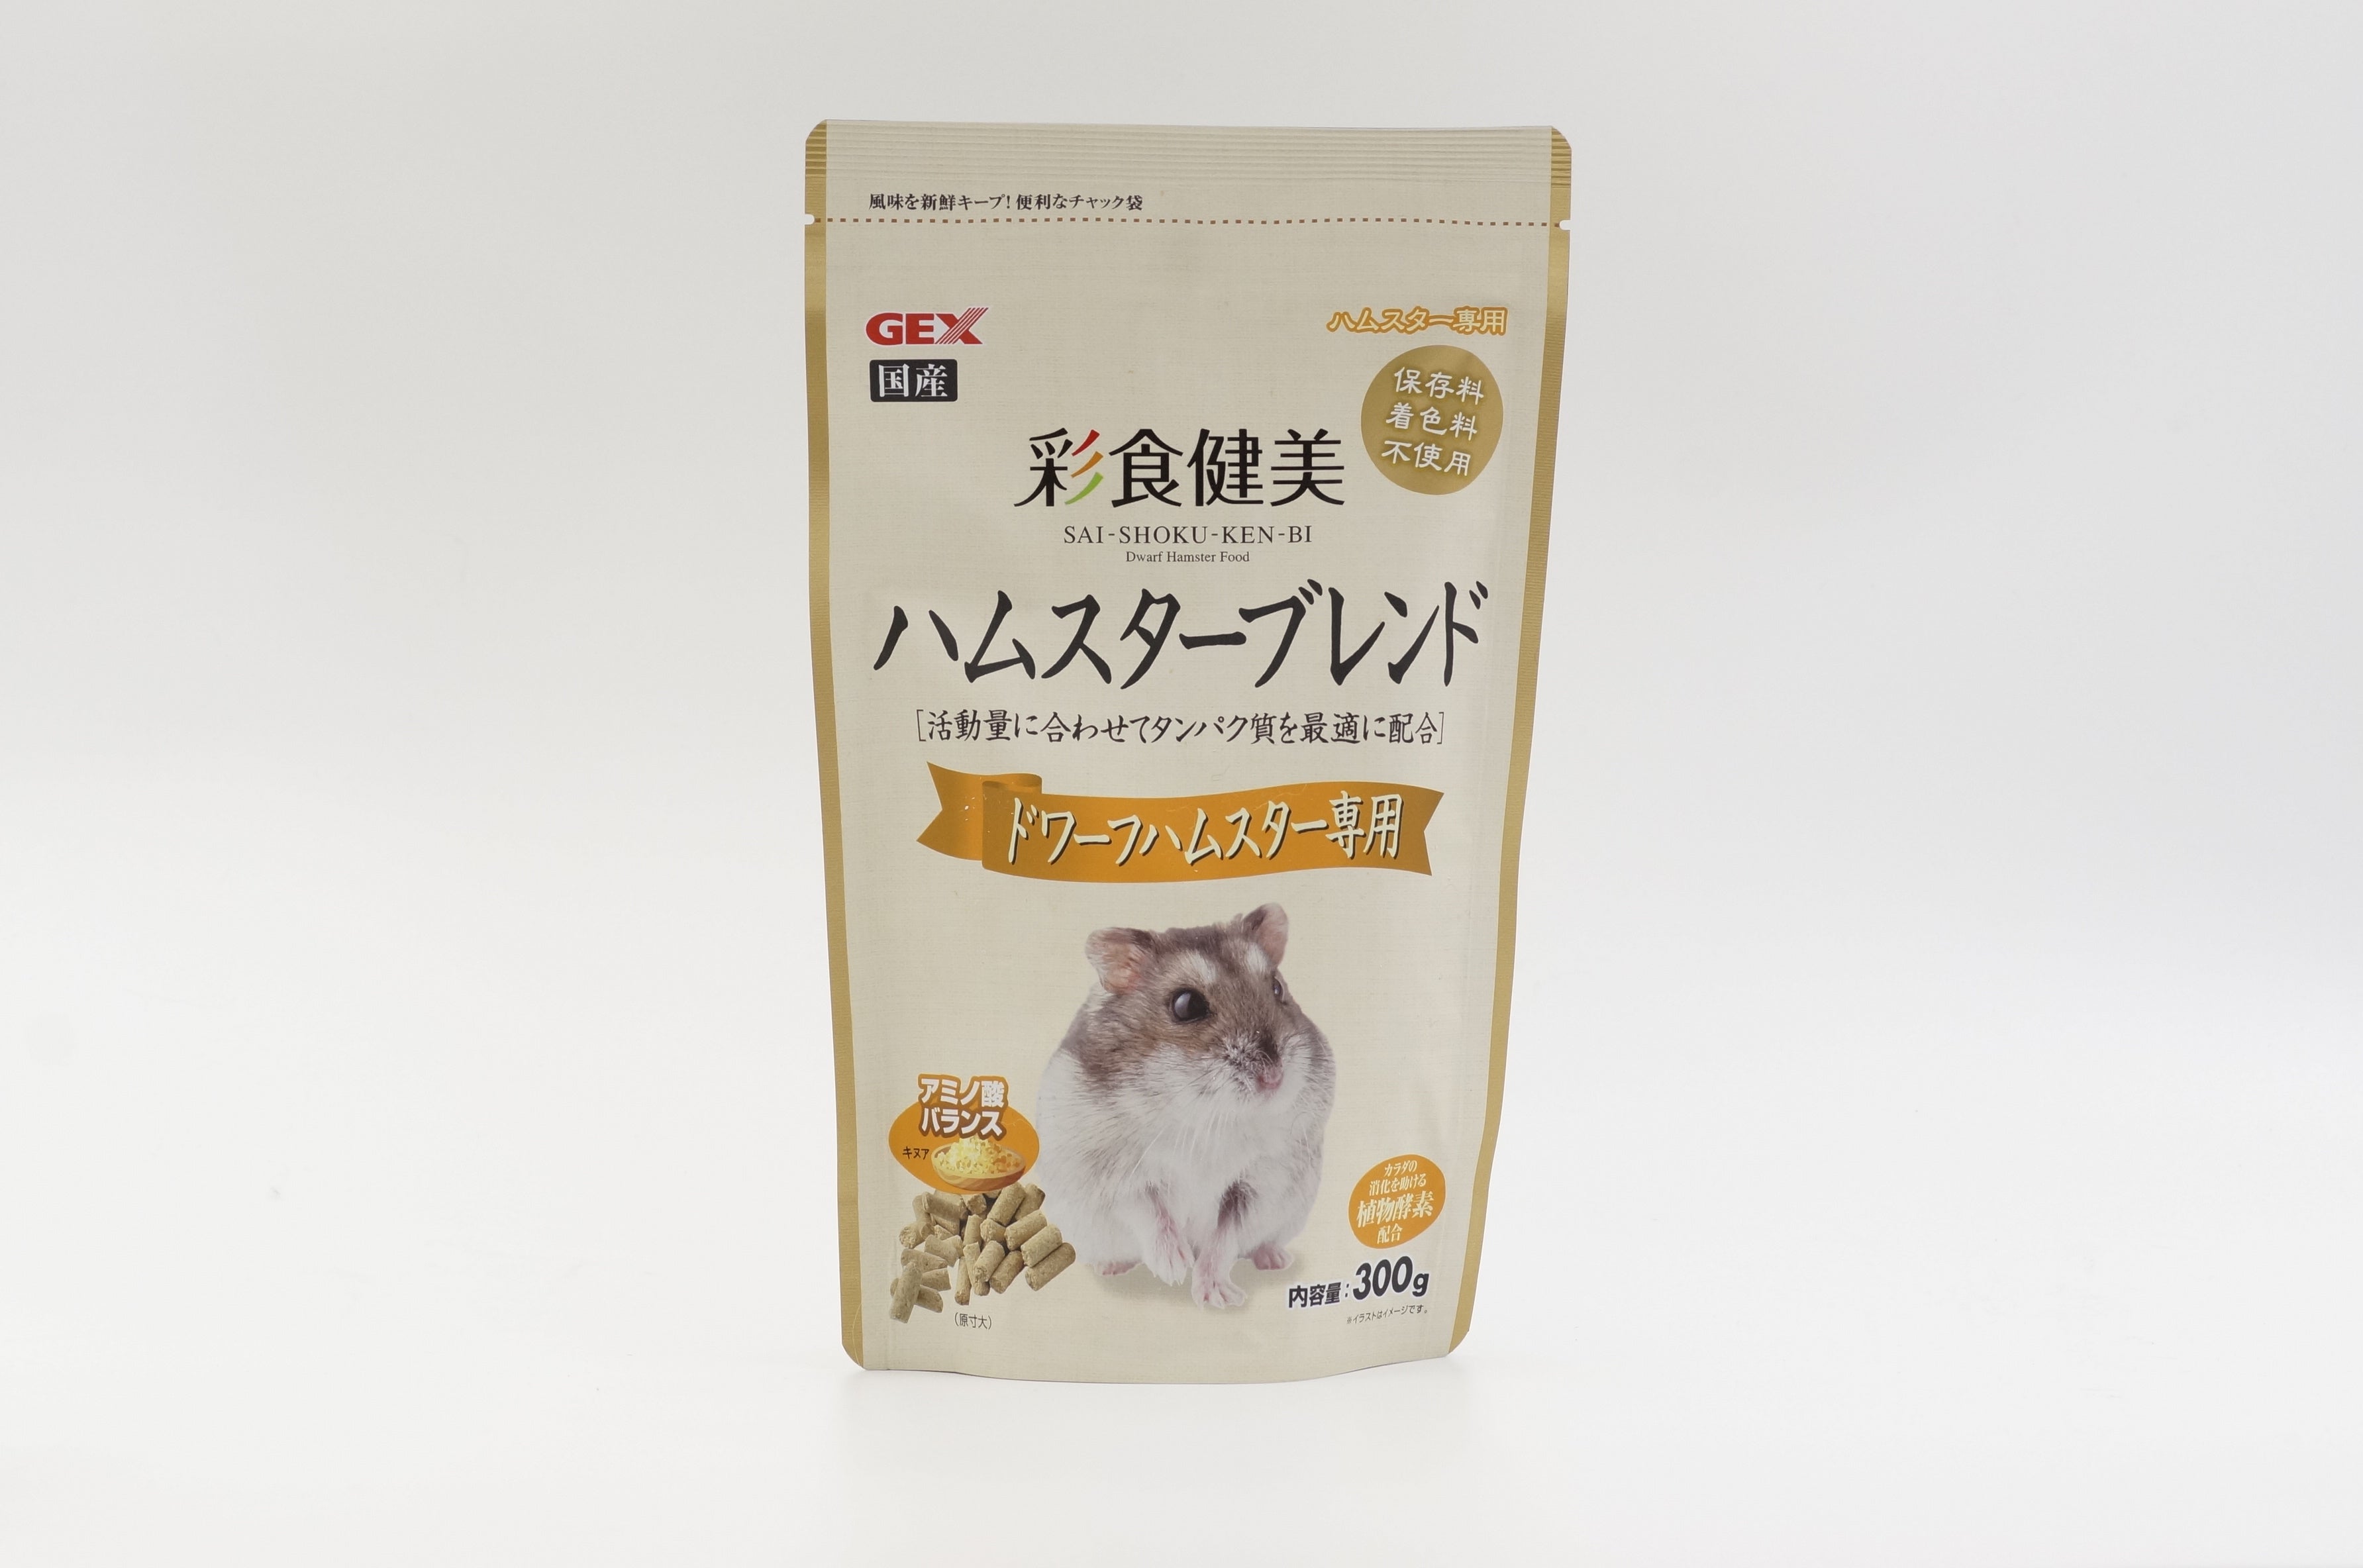 Versele Laga Crispy Muesli Hamster & Co 400g/1.0kg – 88 Pets Mart